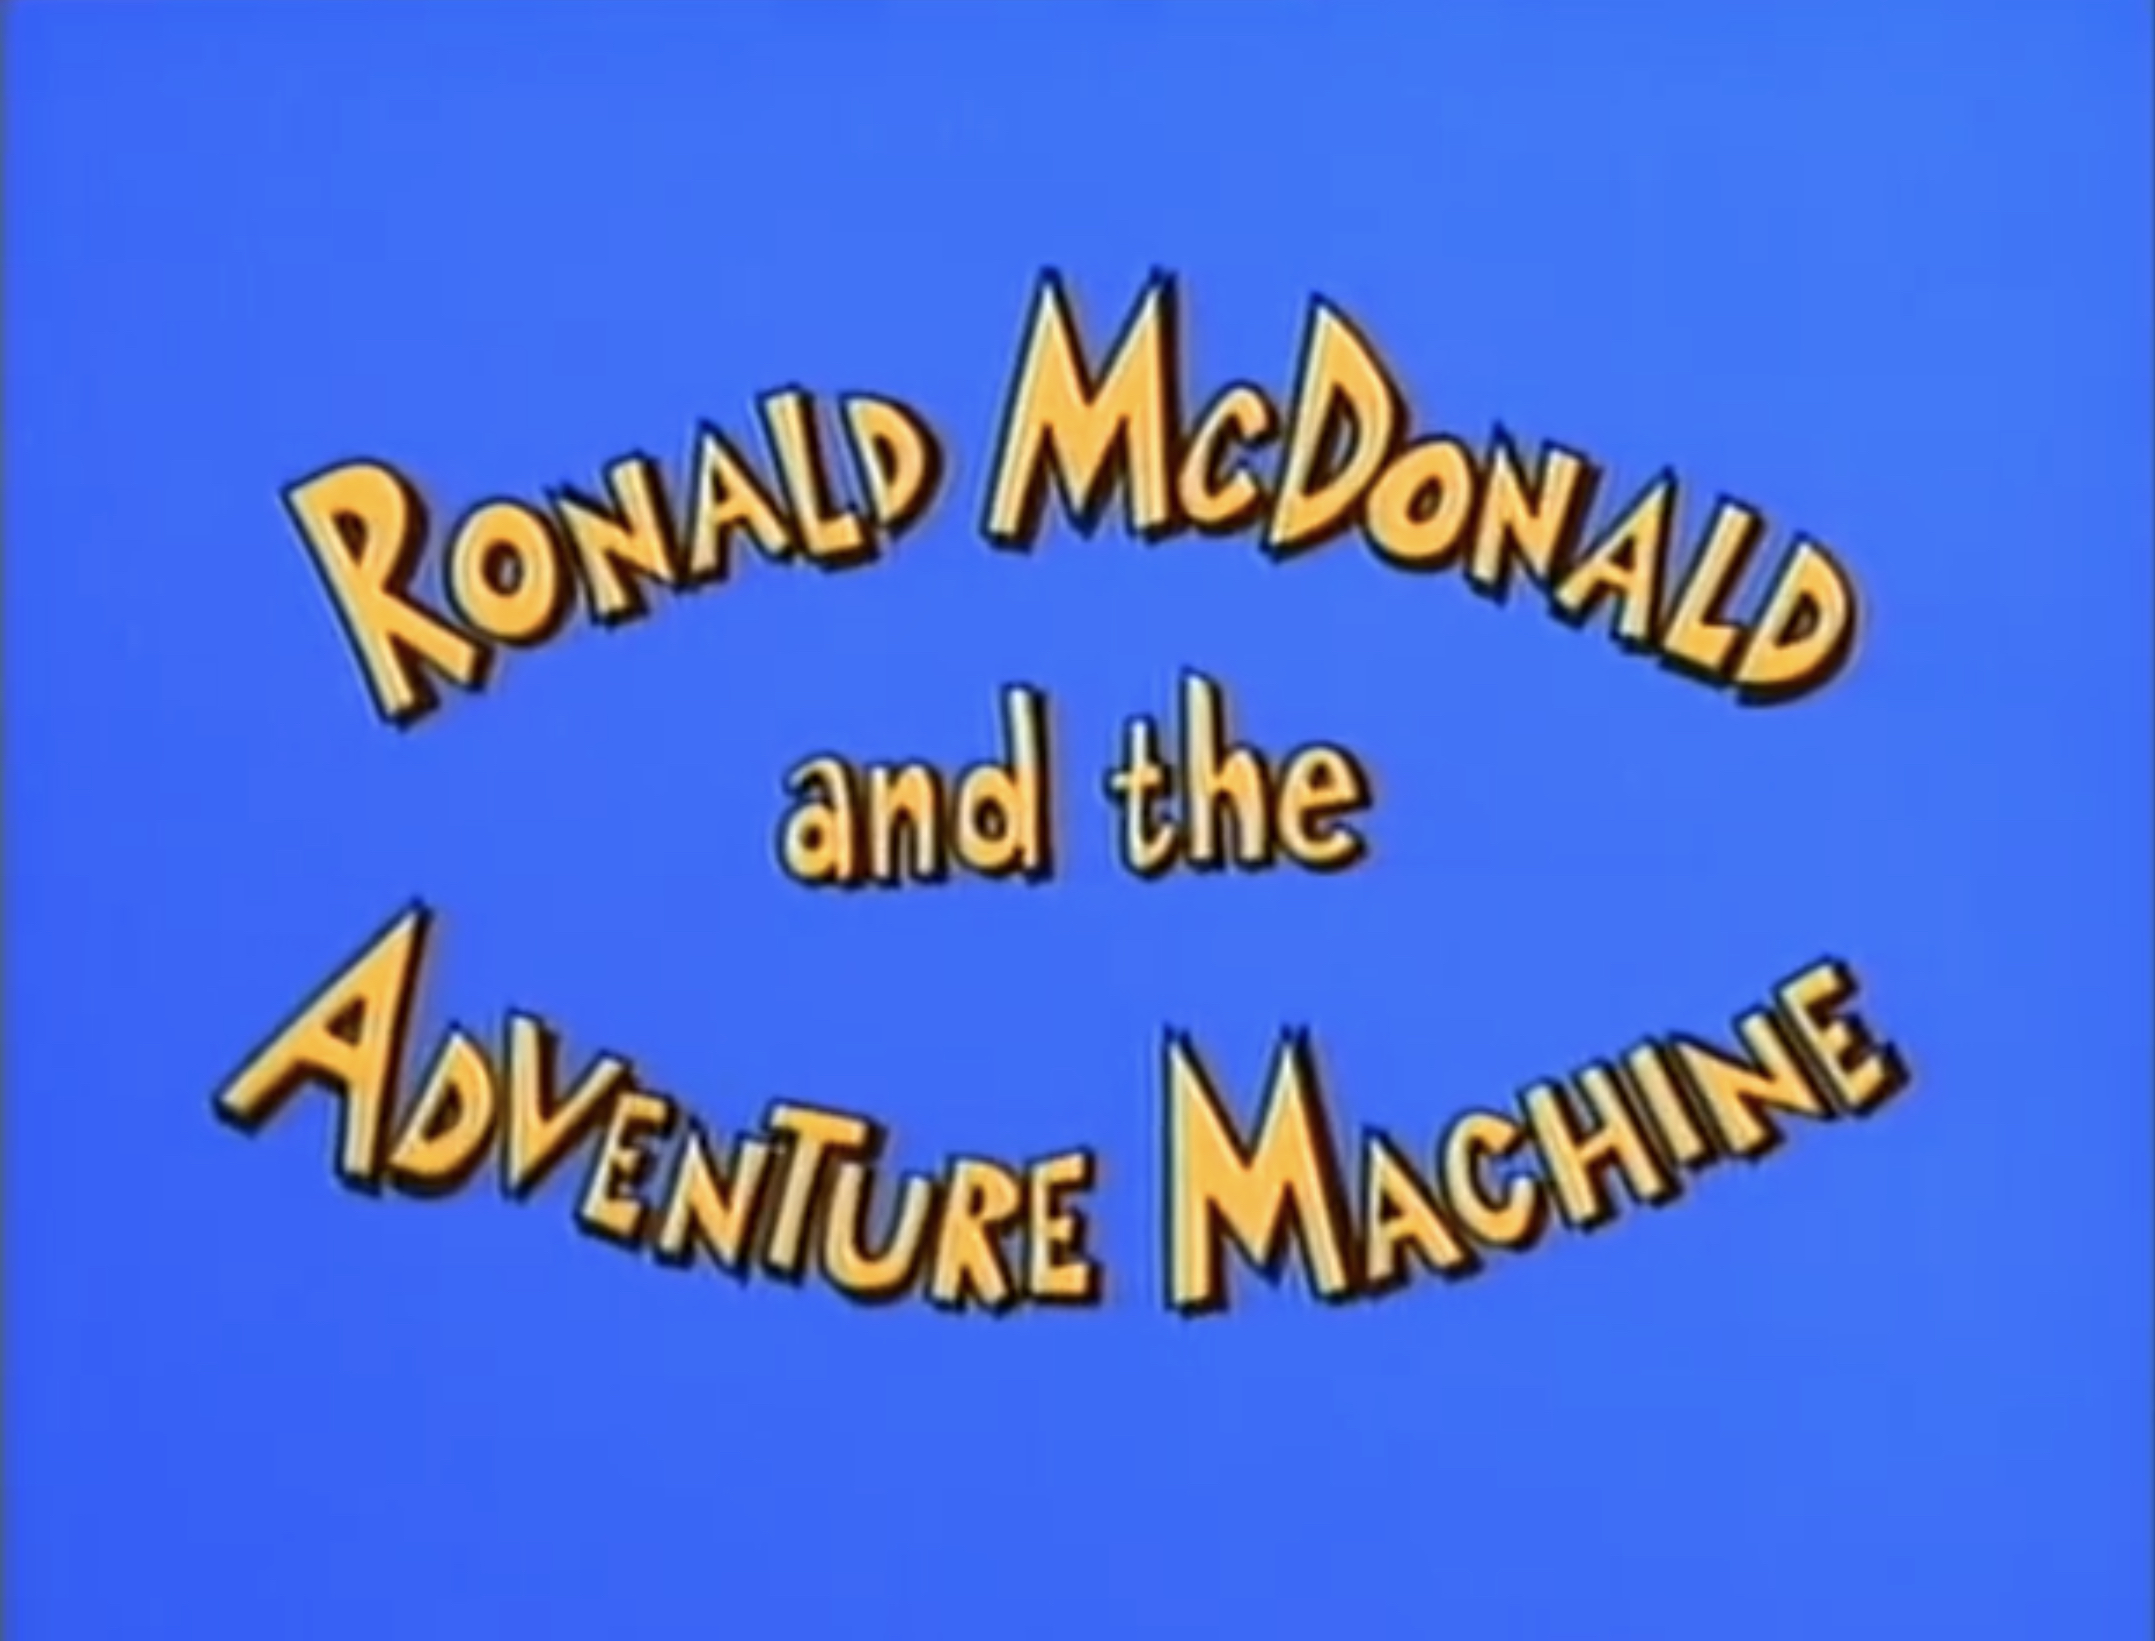 Ronald mcdonald adventure machine.jpg